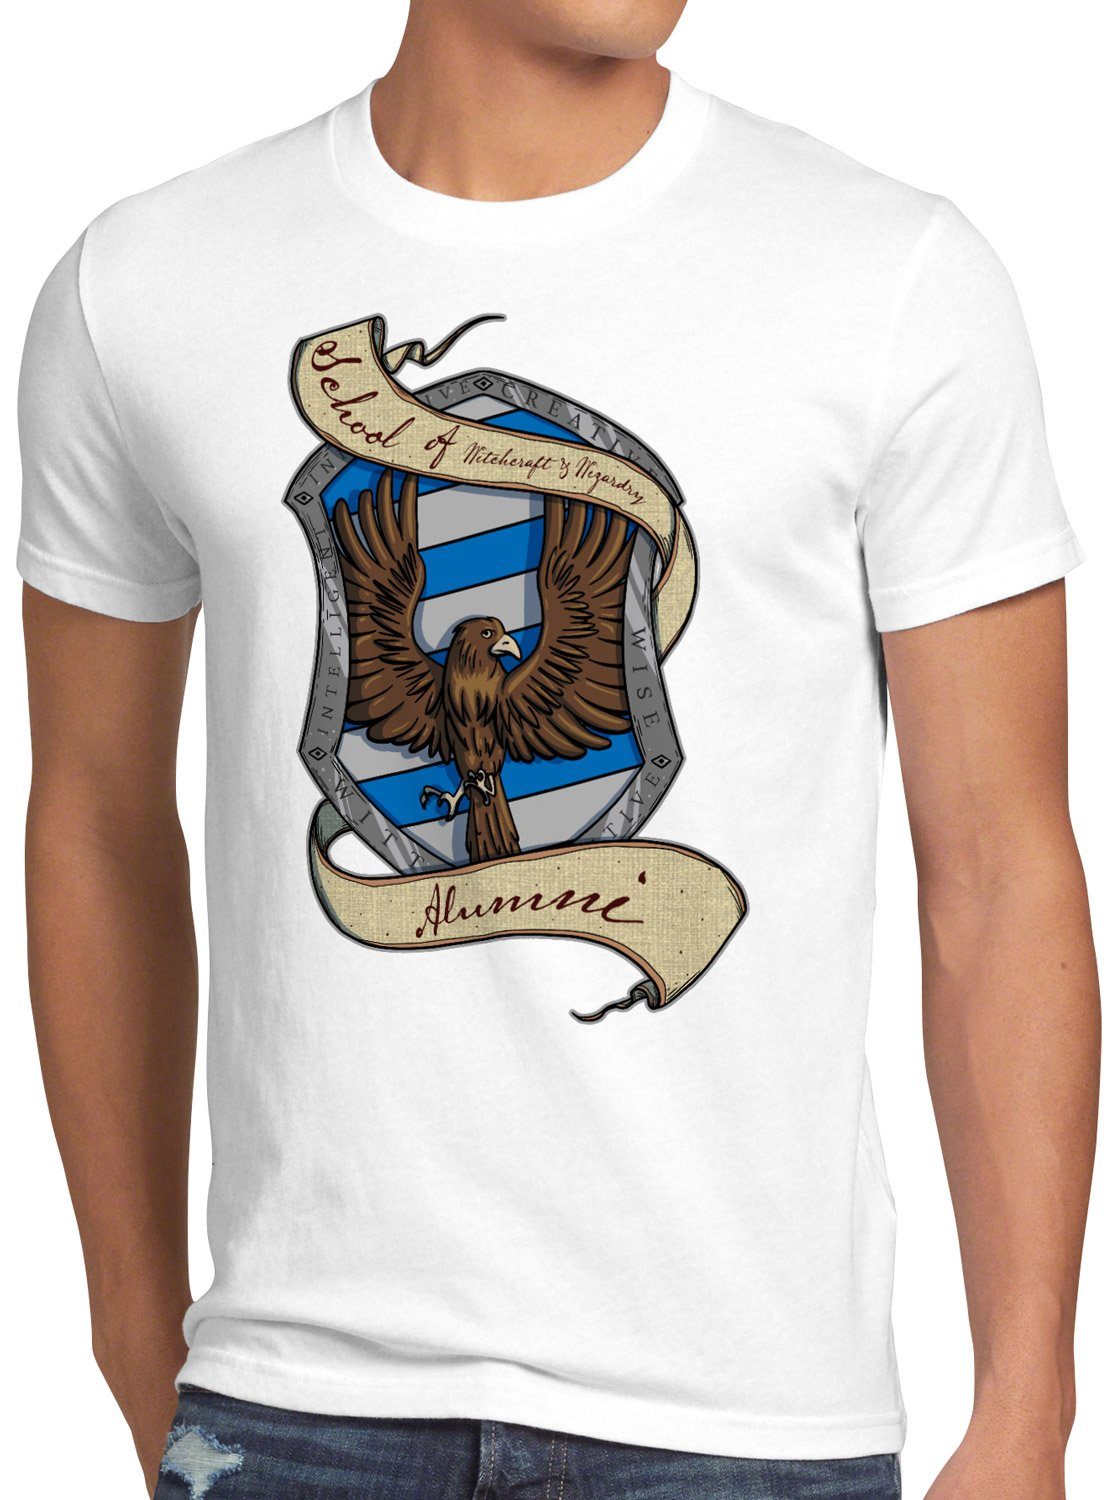 style3 Herren potter T-Shirt schule weiß Haus luft Hut zauberei Adler Print-Shirt